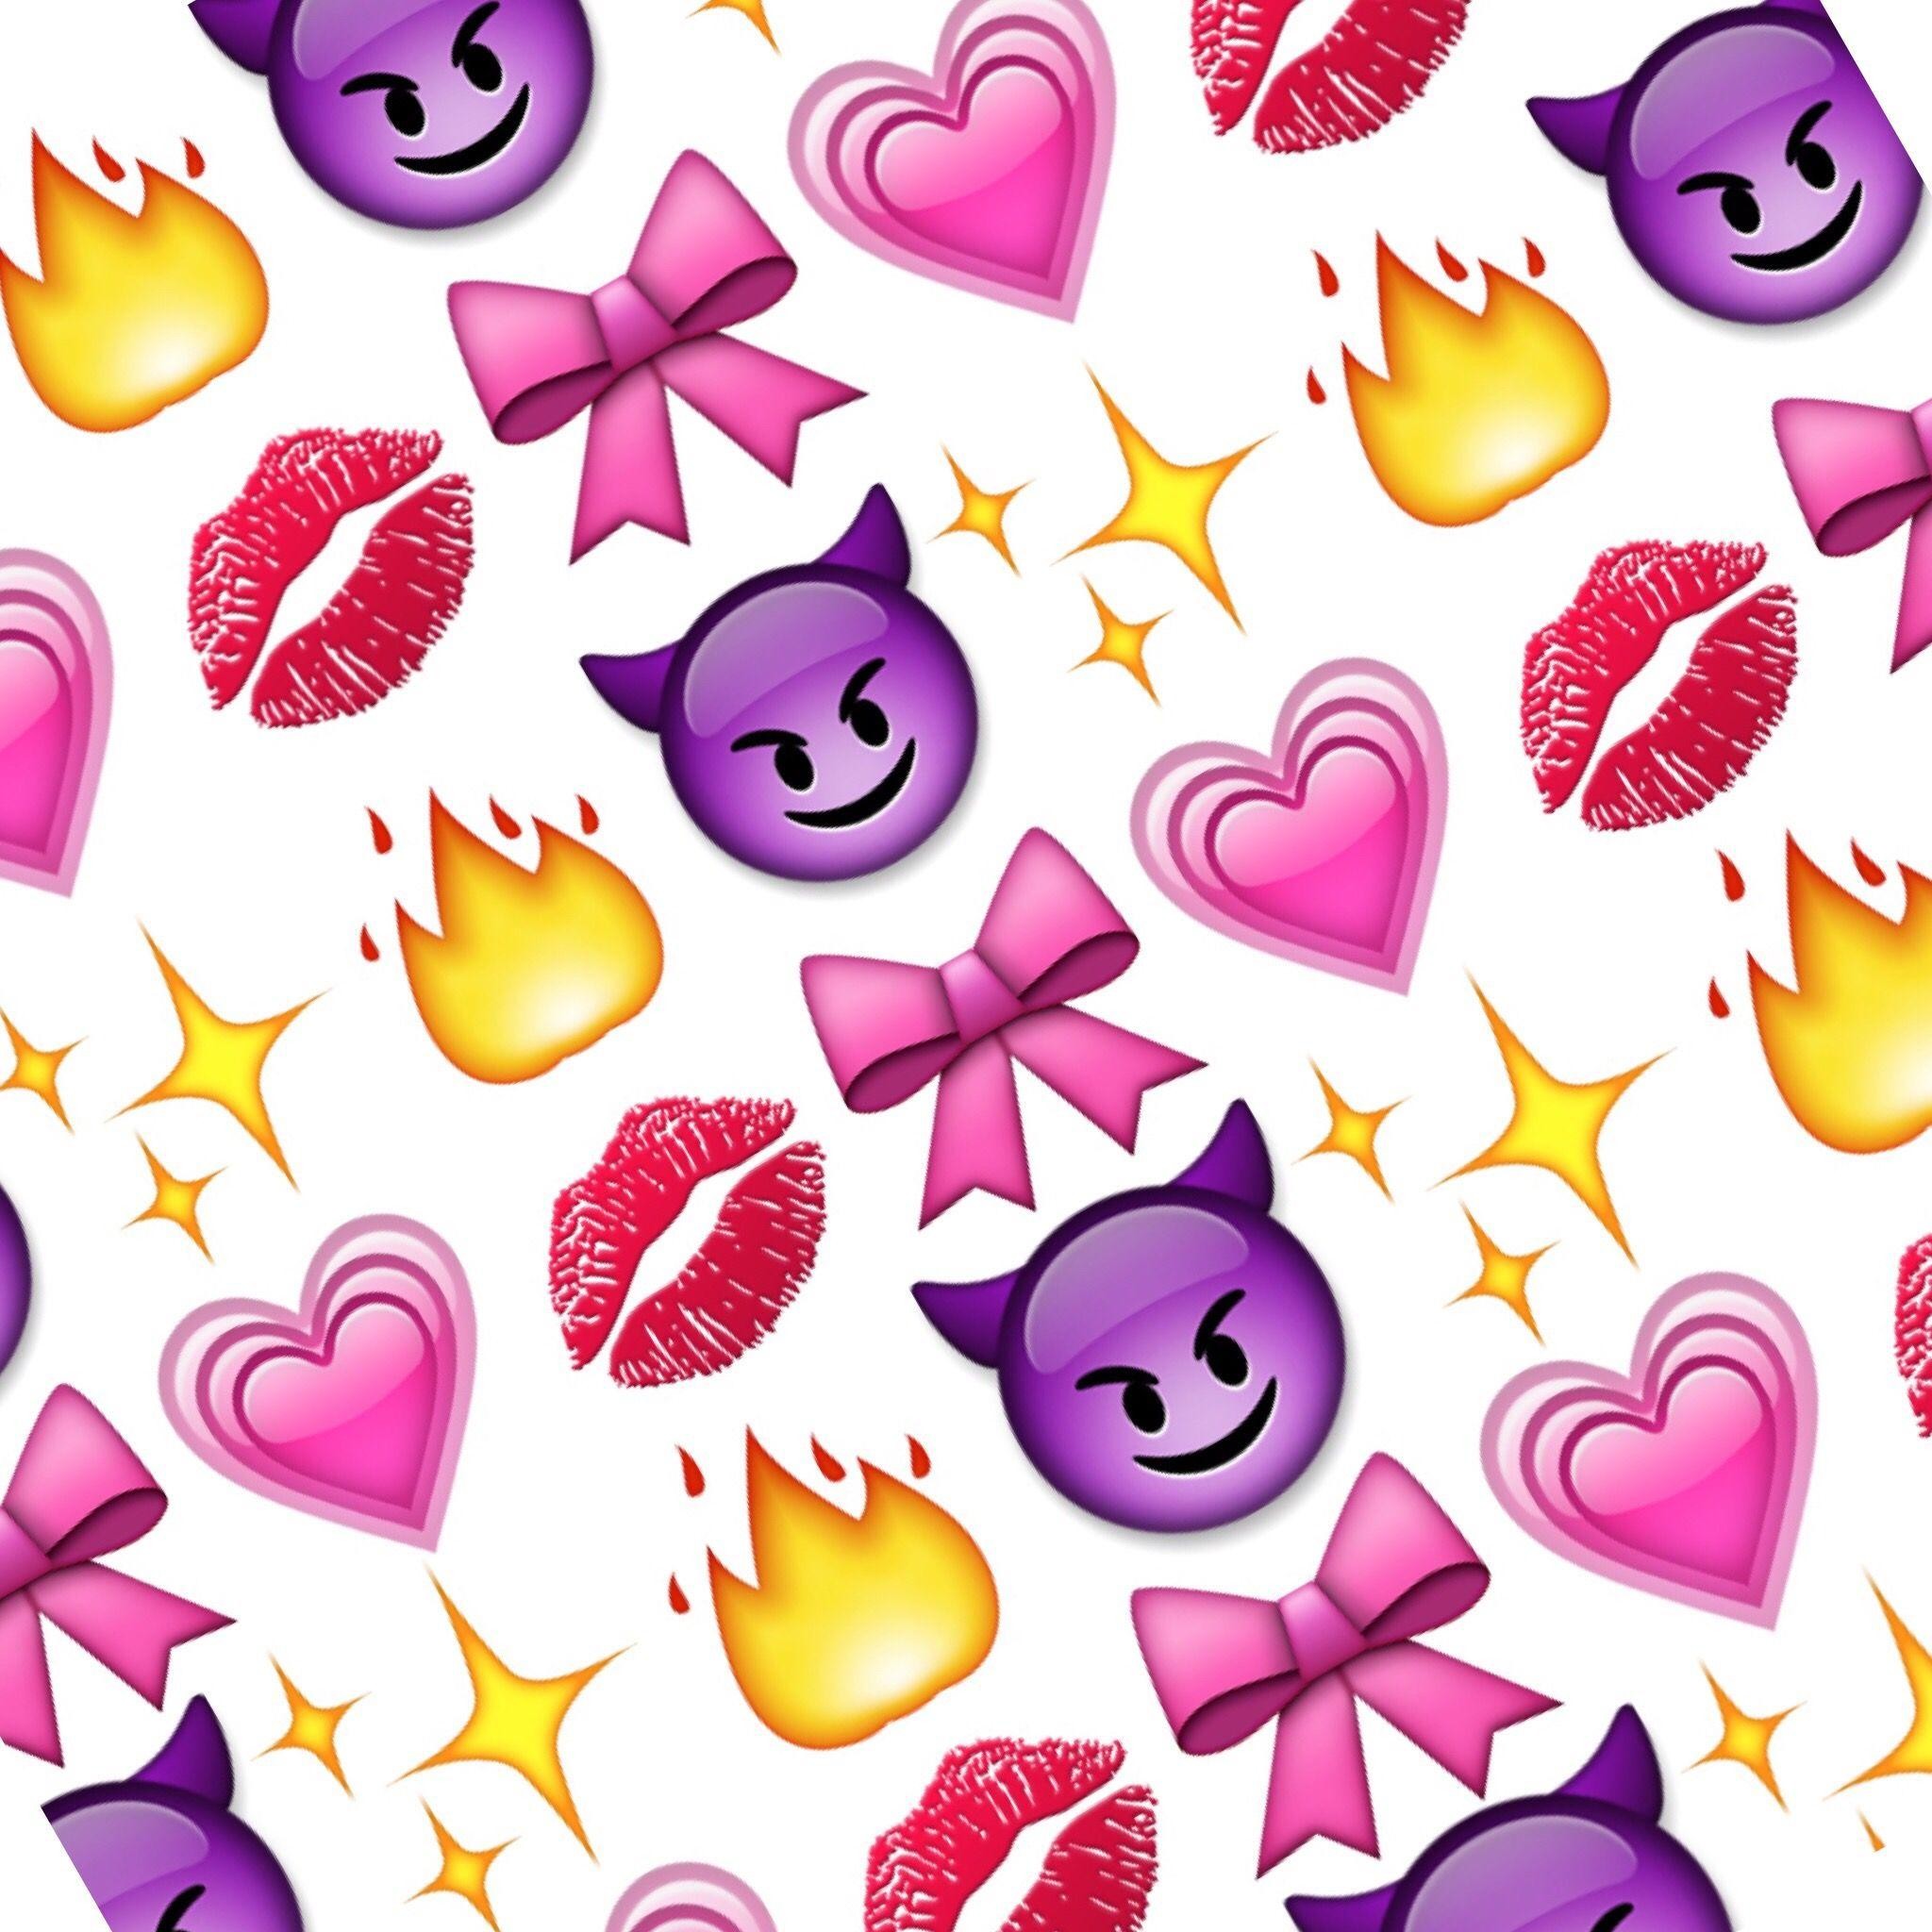 Emojis, Wallpapers and Emoji wallpaper on Pinterest